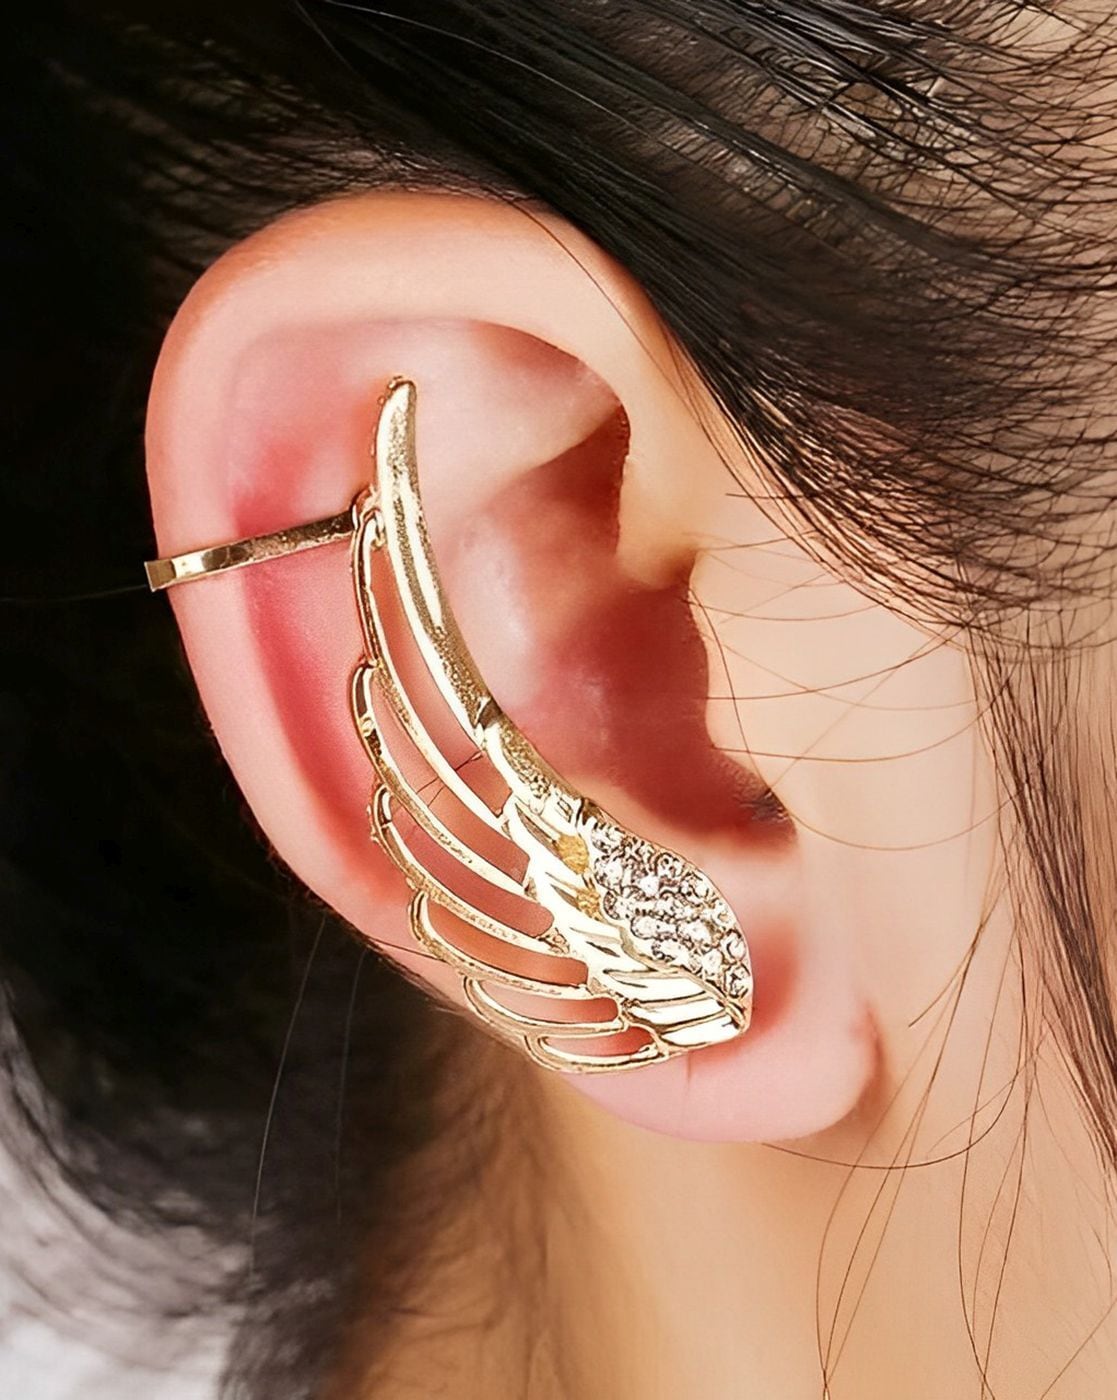 Amazon.com: Ear Cuff Earring for Women No Piercing Industrial Bar Cartilage  Helix Earring 14k Gold Filled Single : Handmade Products